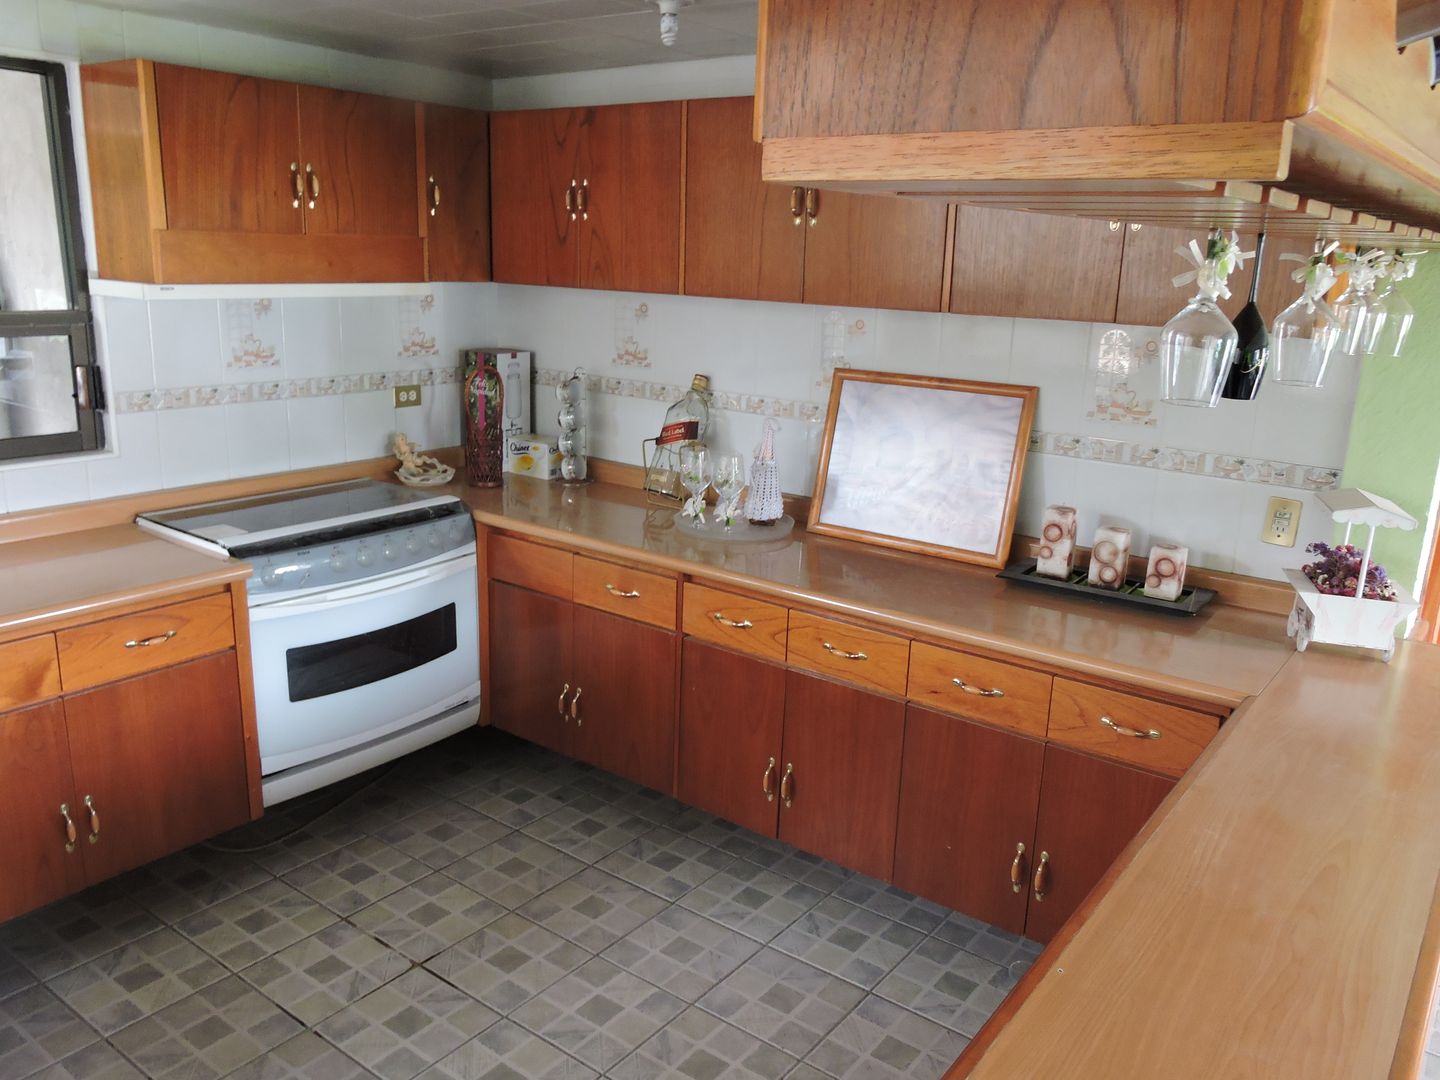 Barra, Cantina y Puertas de cocina en madera., La Casa del Diseño La Casa del Diseño Modern kitchen Wood Wood effect